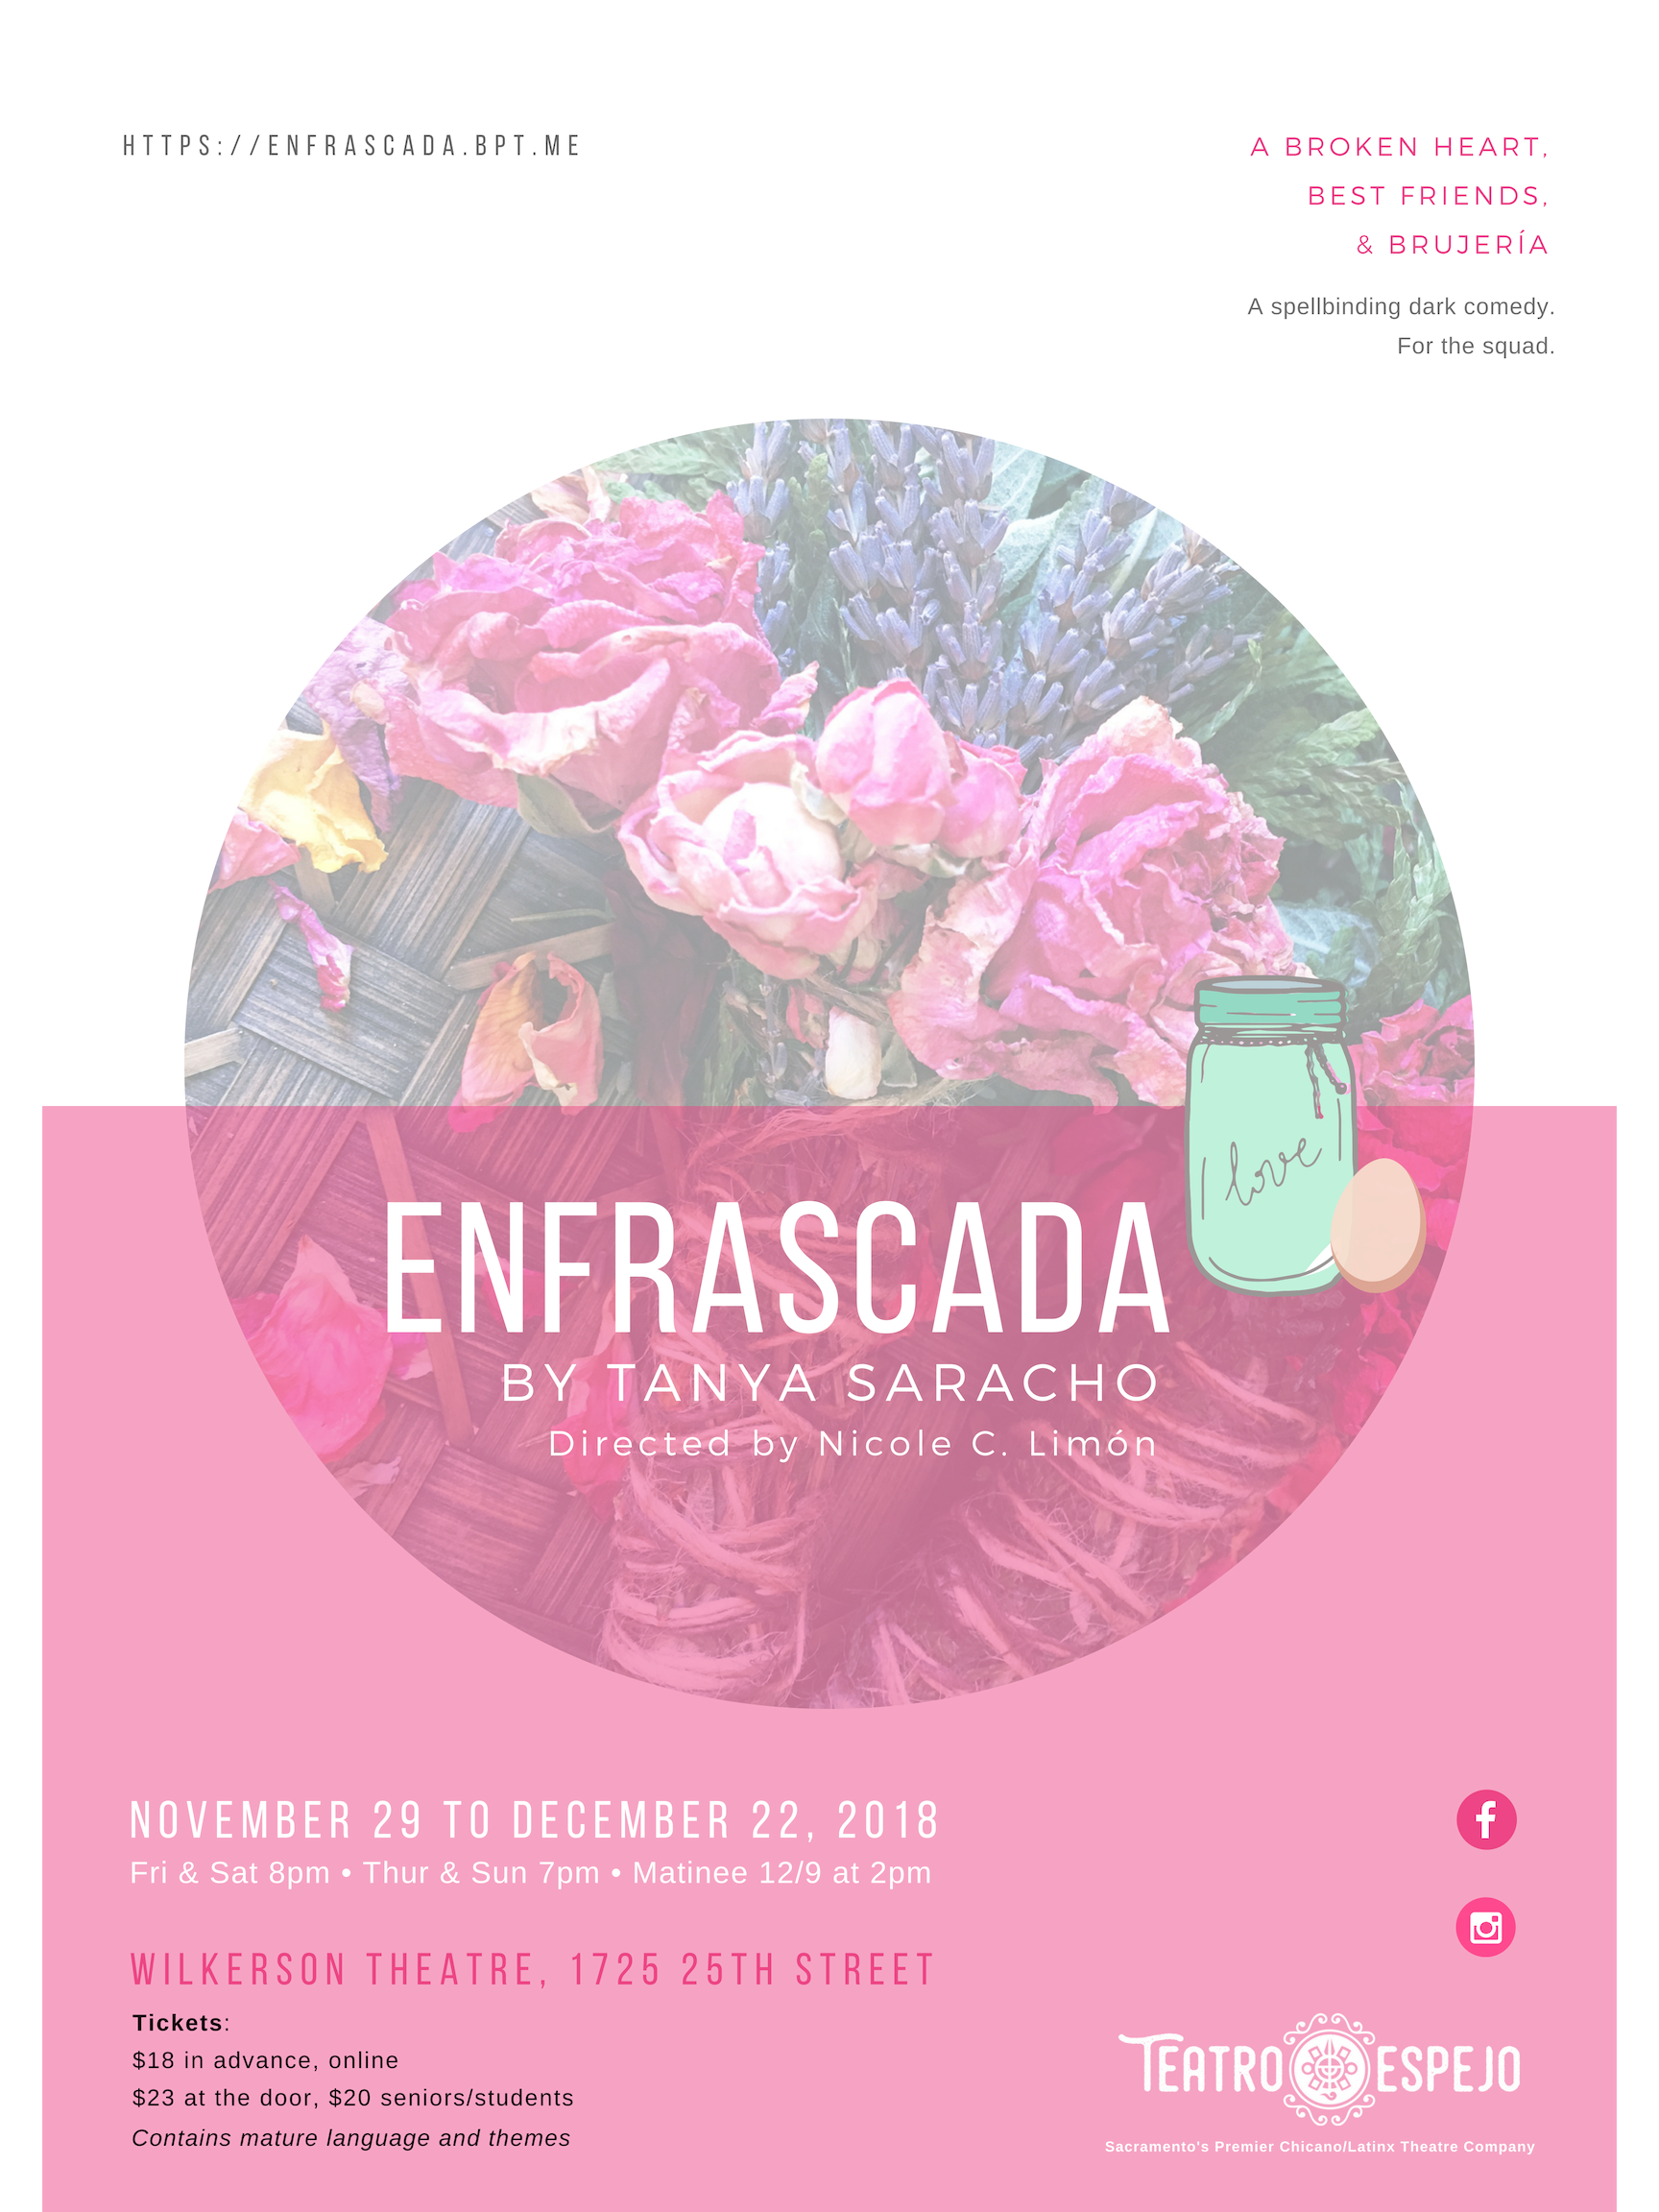  Poster for Enfrascada by Tanya Saracho 